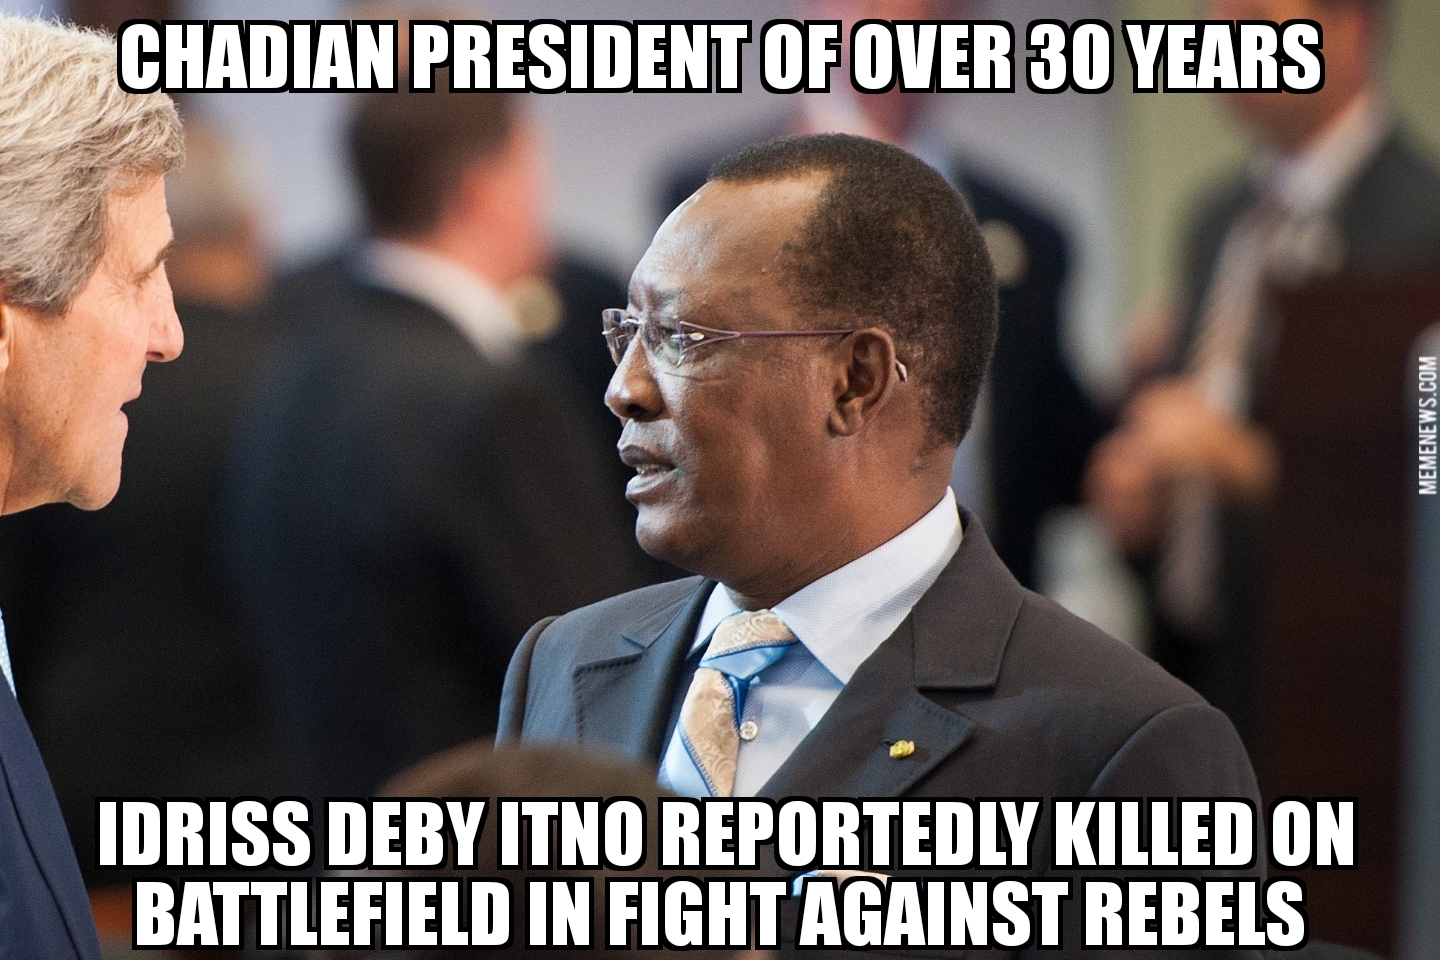 Chadian President Idriss Deby Itno dies